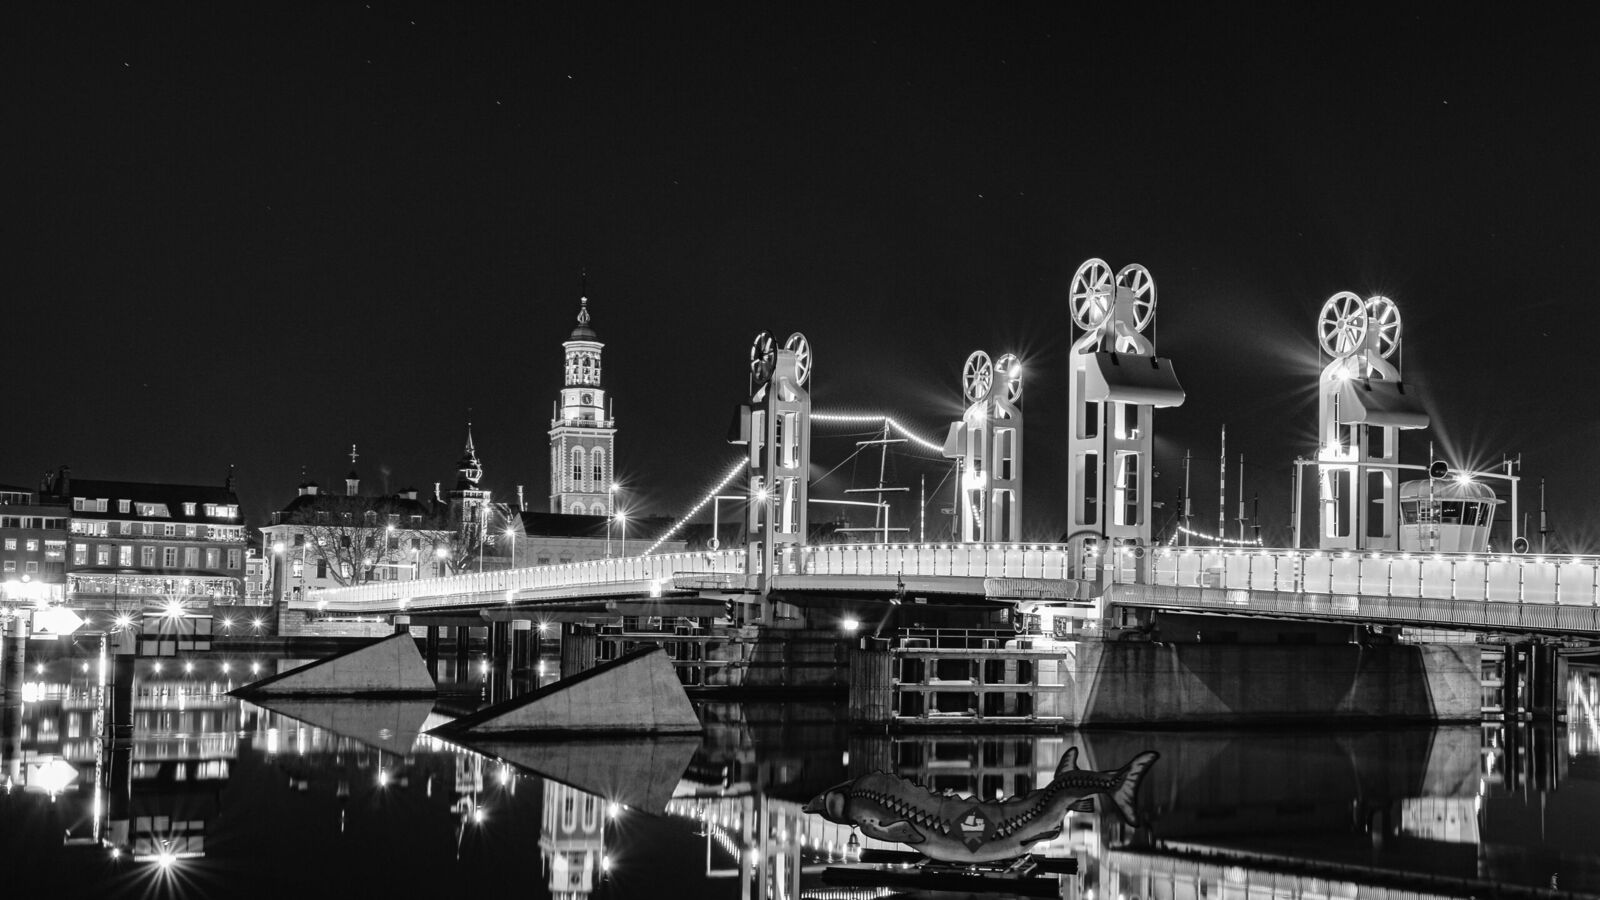 Stadsbrug Kampen bij nacht